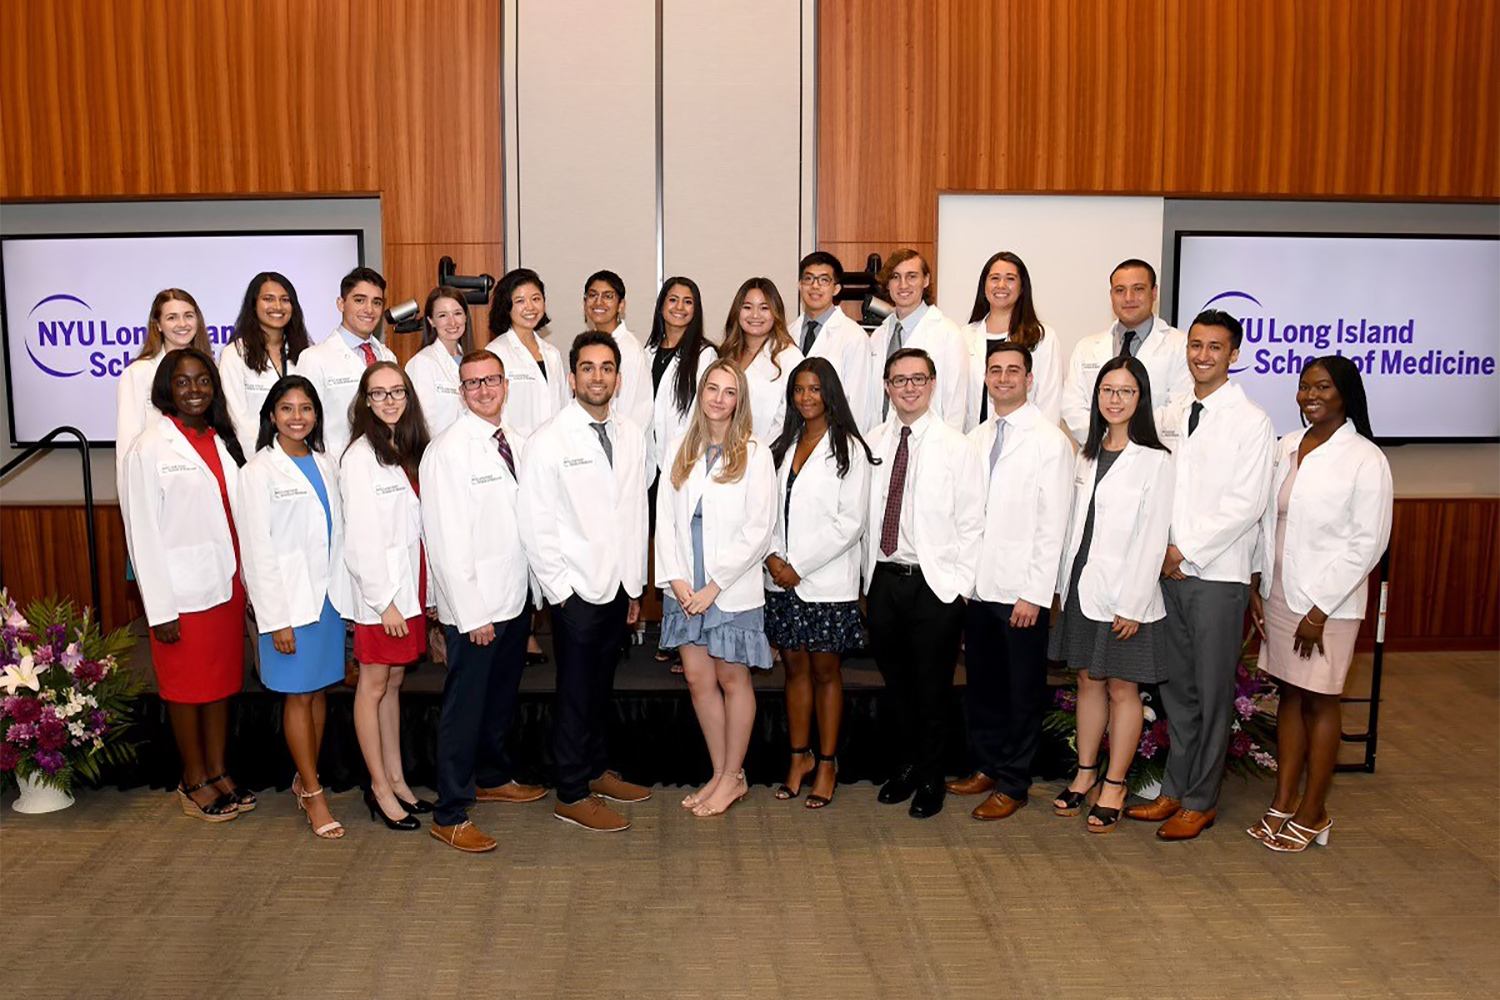 Diversity Defines White Coat Ceremony at NYU Long Island School of